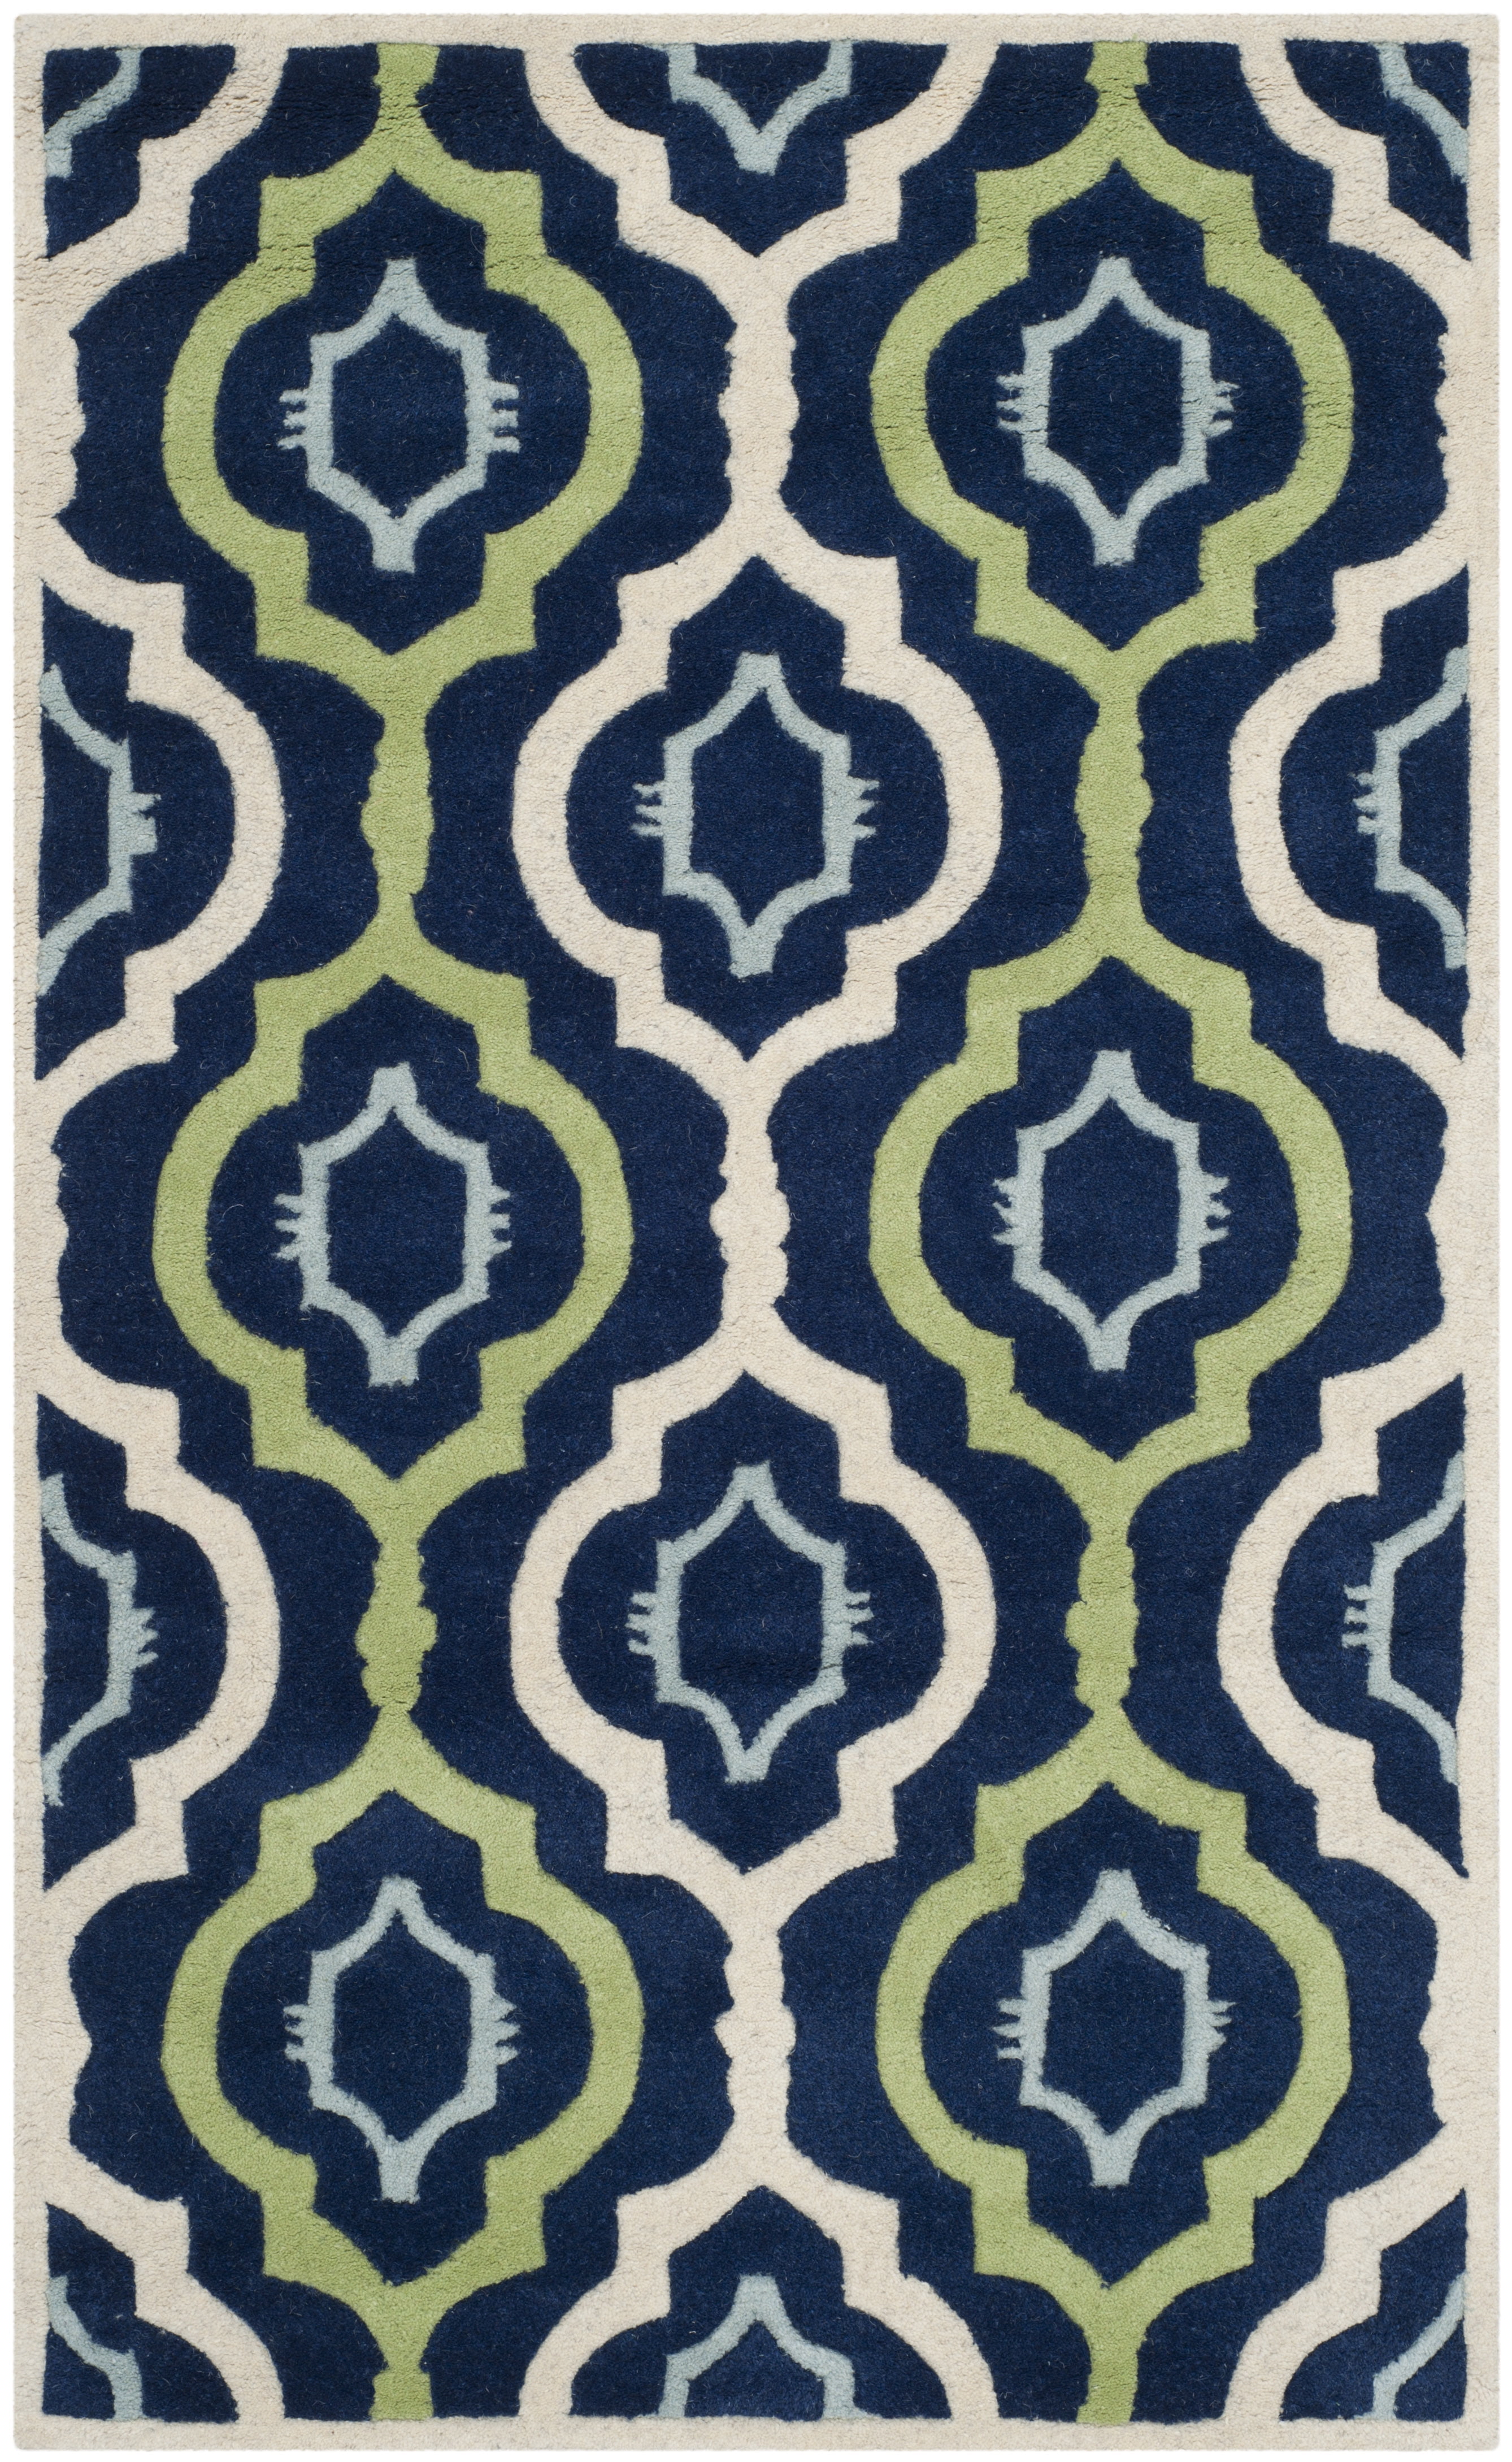 Safavieh Chatham Collection CHT747C Handmade Geometric Premium Wool Area Rug 8' x 10' Dark Blue Multi 